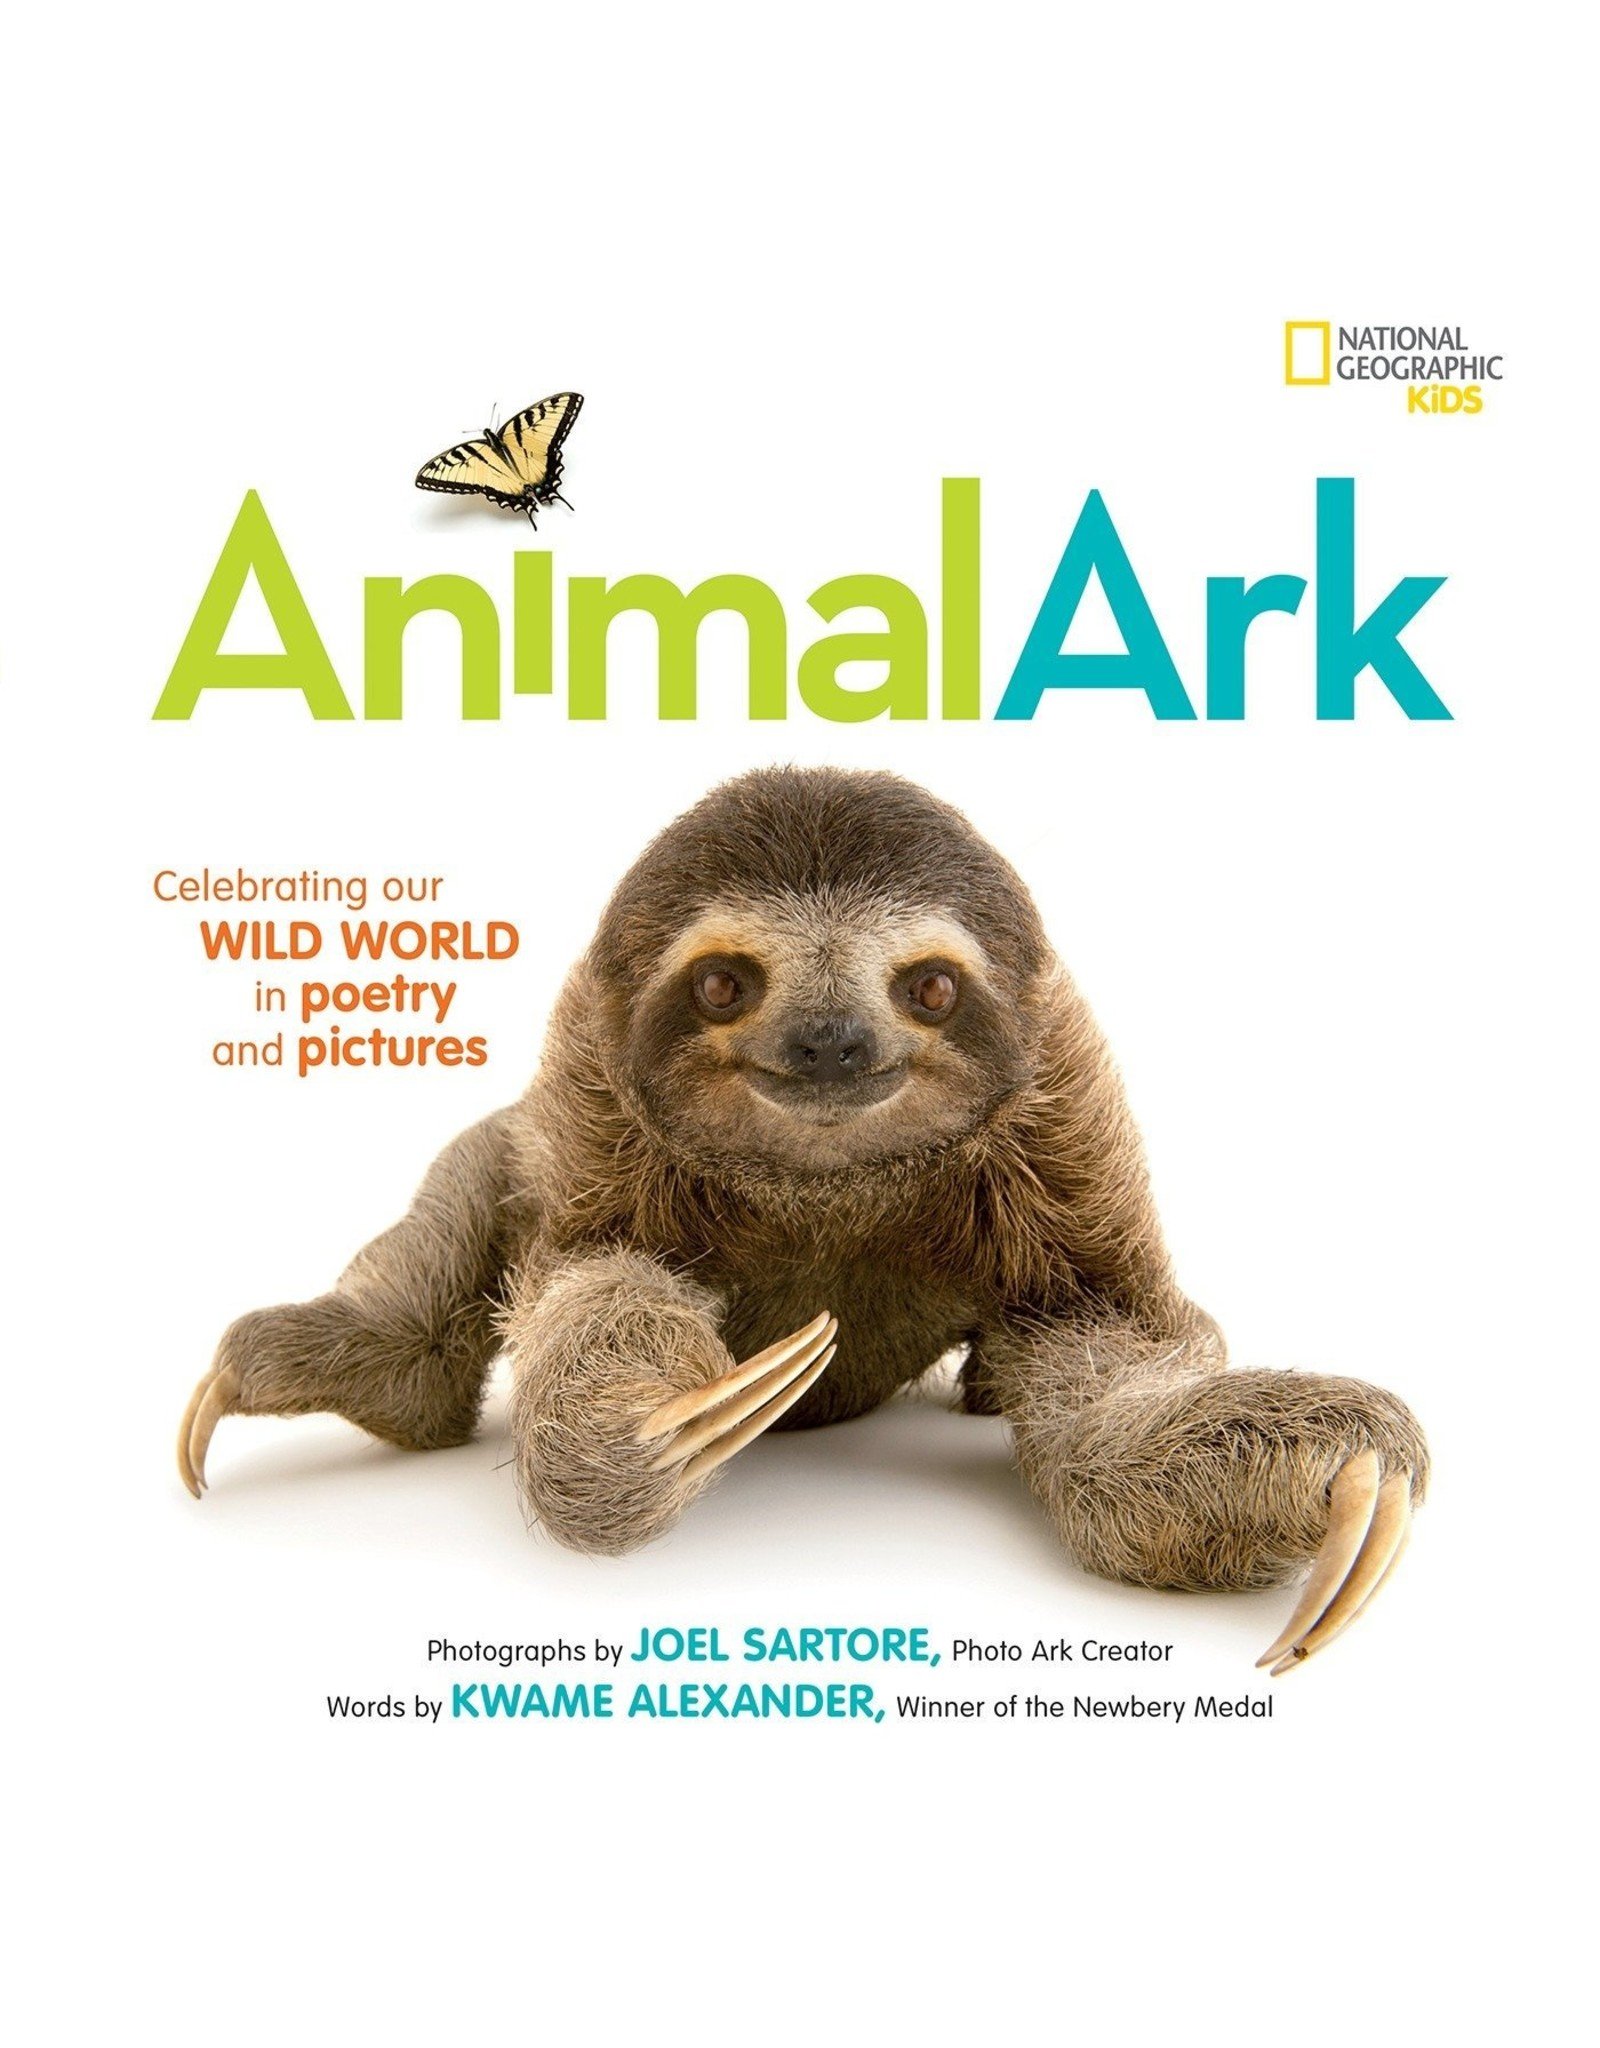 Animal Ark by Kwame Alexander and Joel Sartore